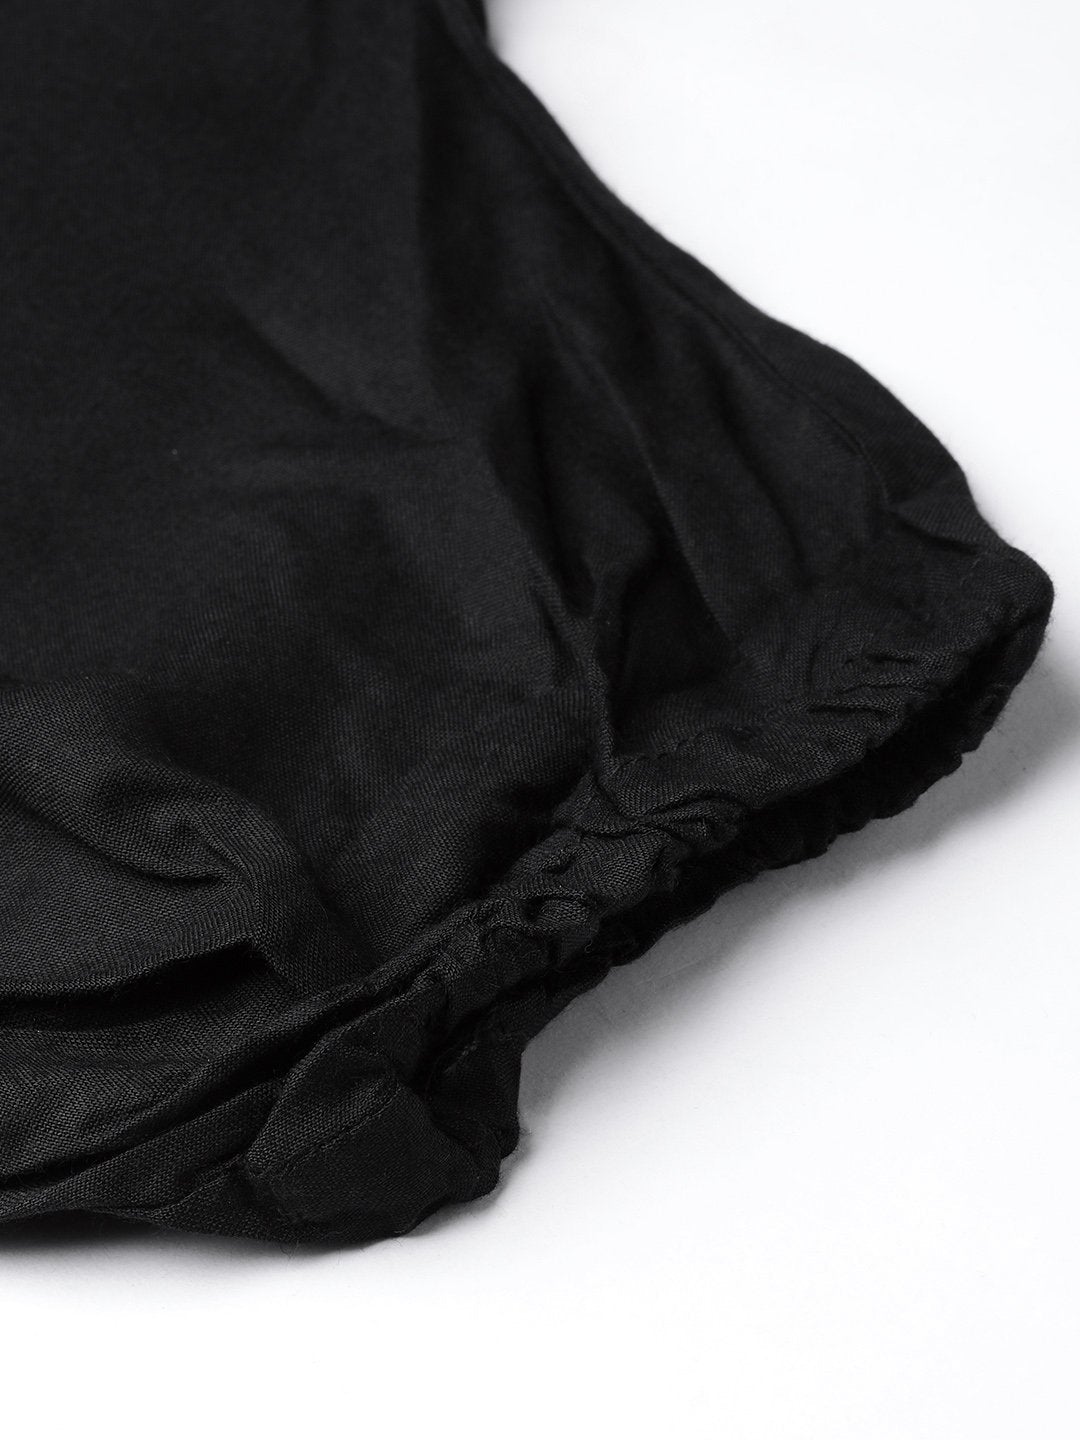 Women's Harem Pants - Black - InWeave